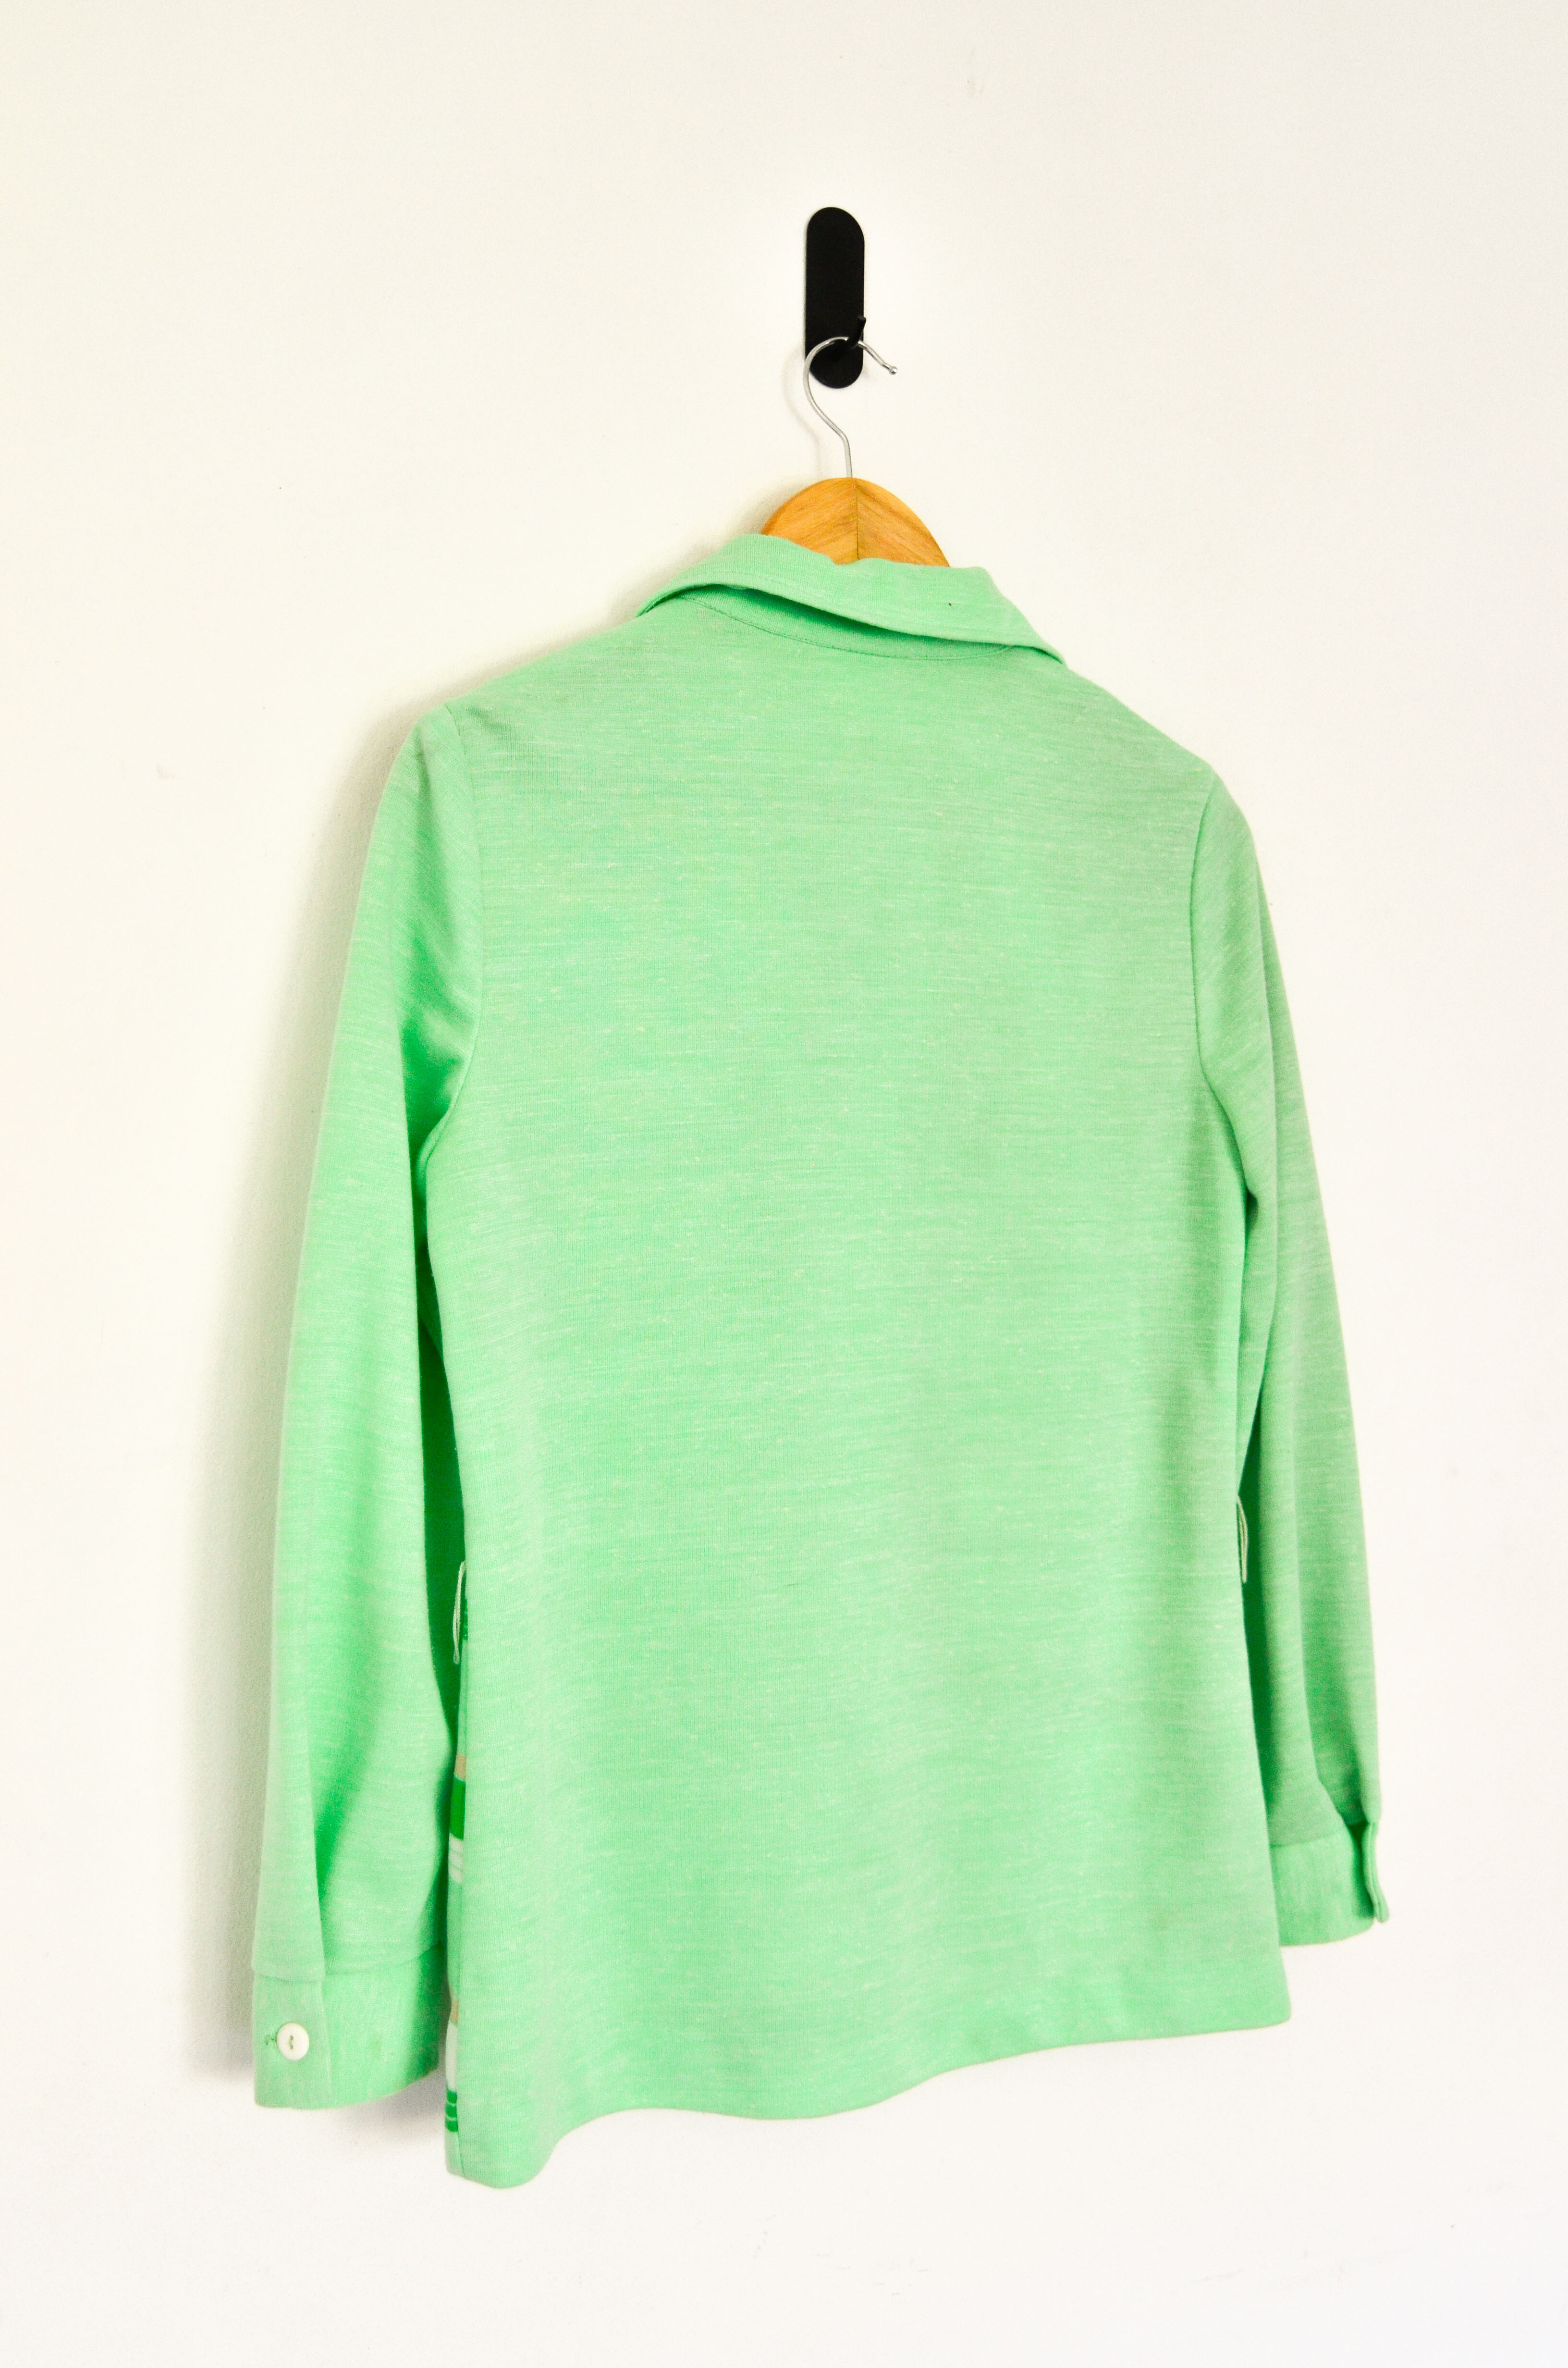 Blusa green 70s rayada